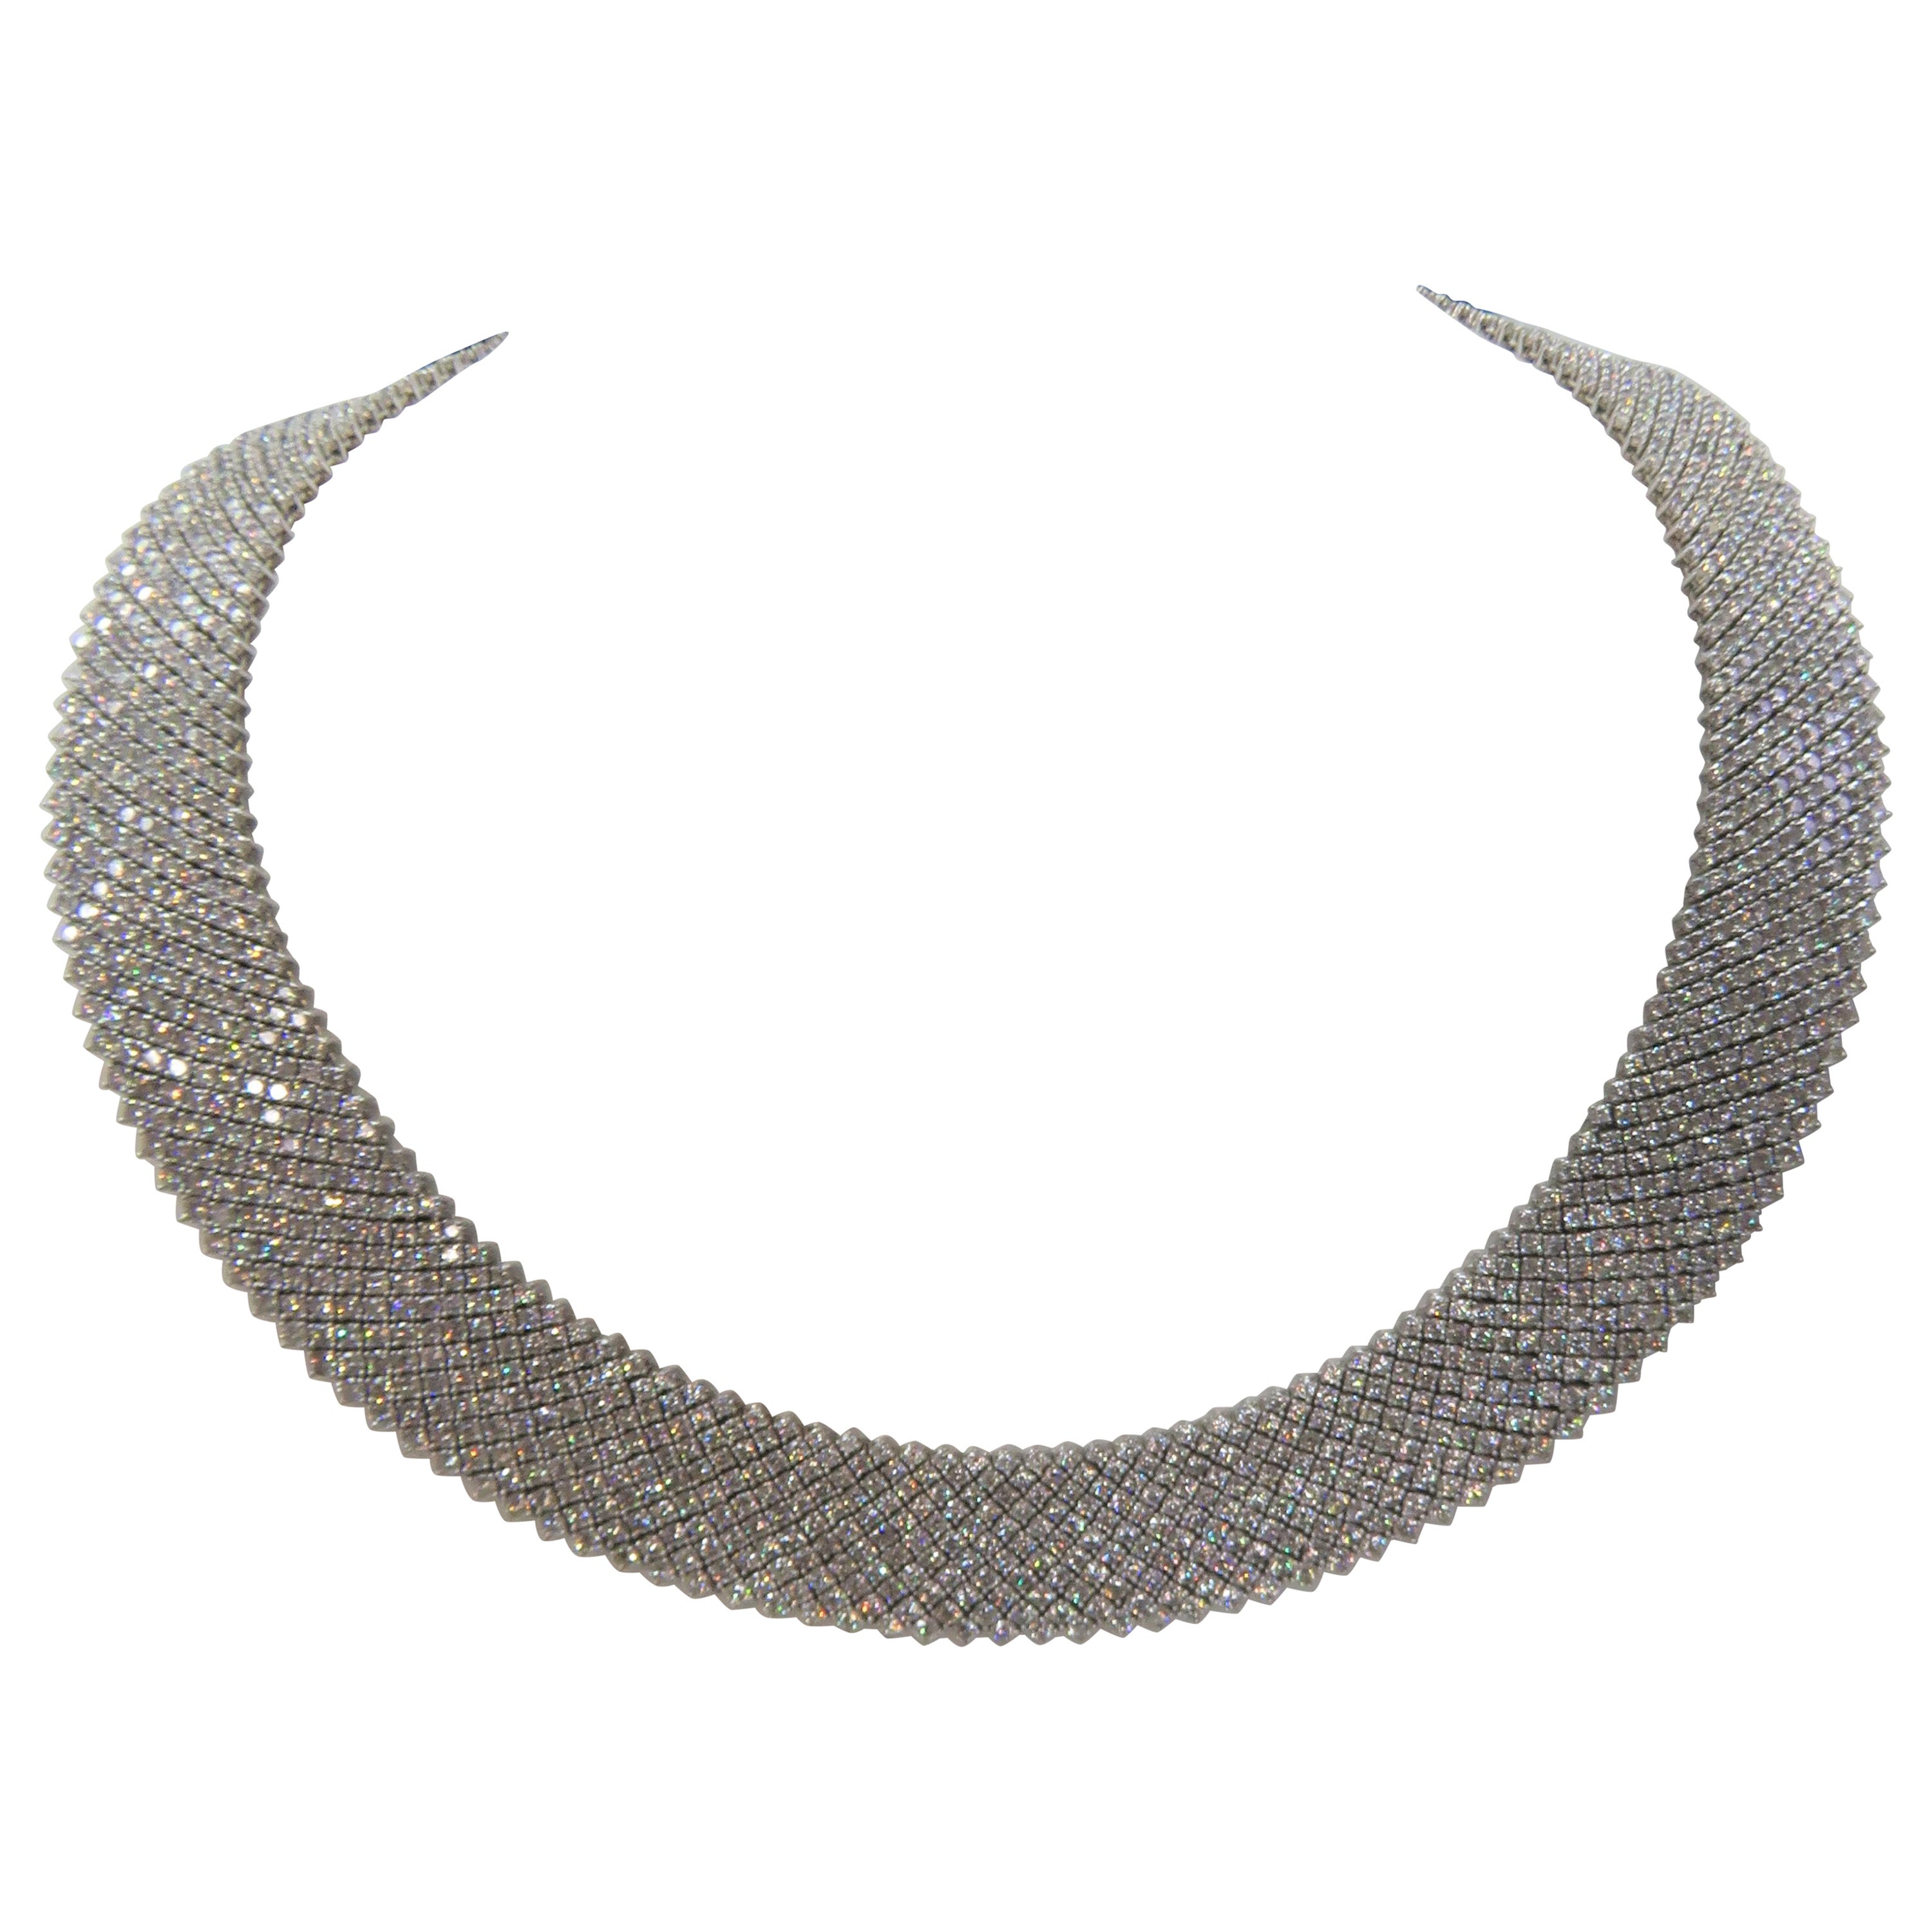 NWT $435, 962 Rare 18KT Gorgeous Glittering Fancy Diamond 61 Carat Mesh Necklace